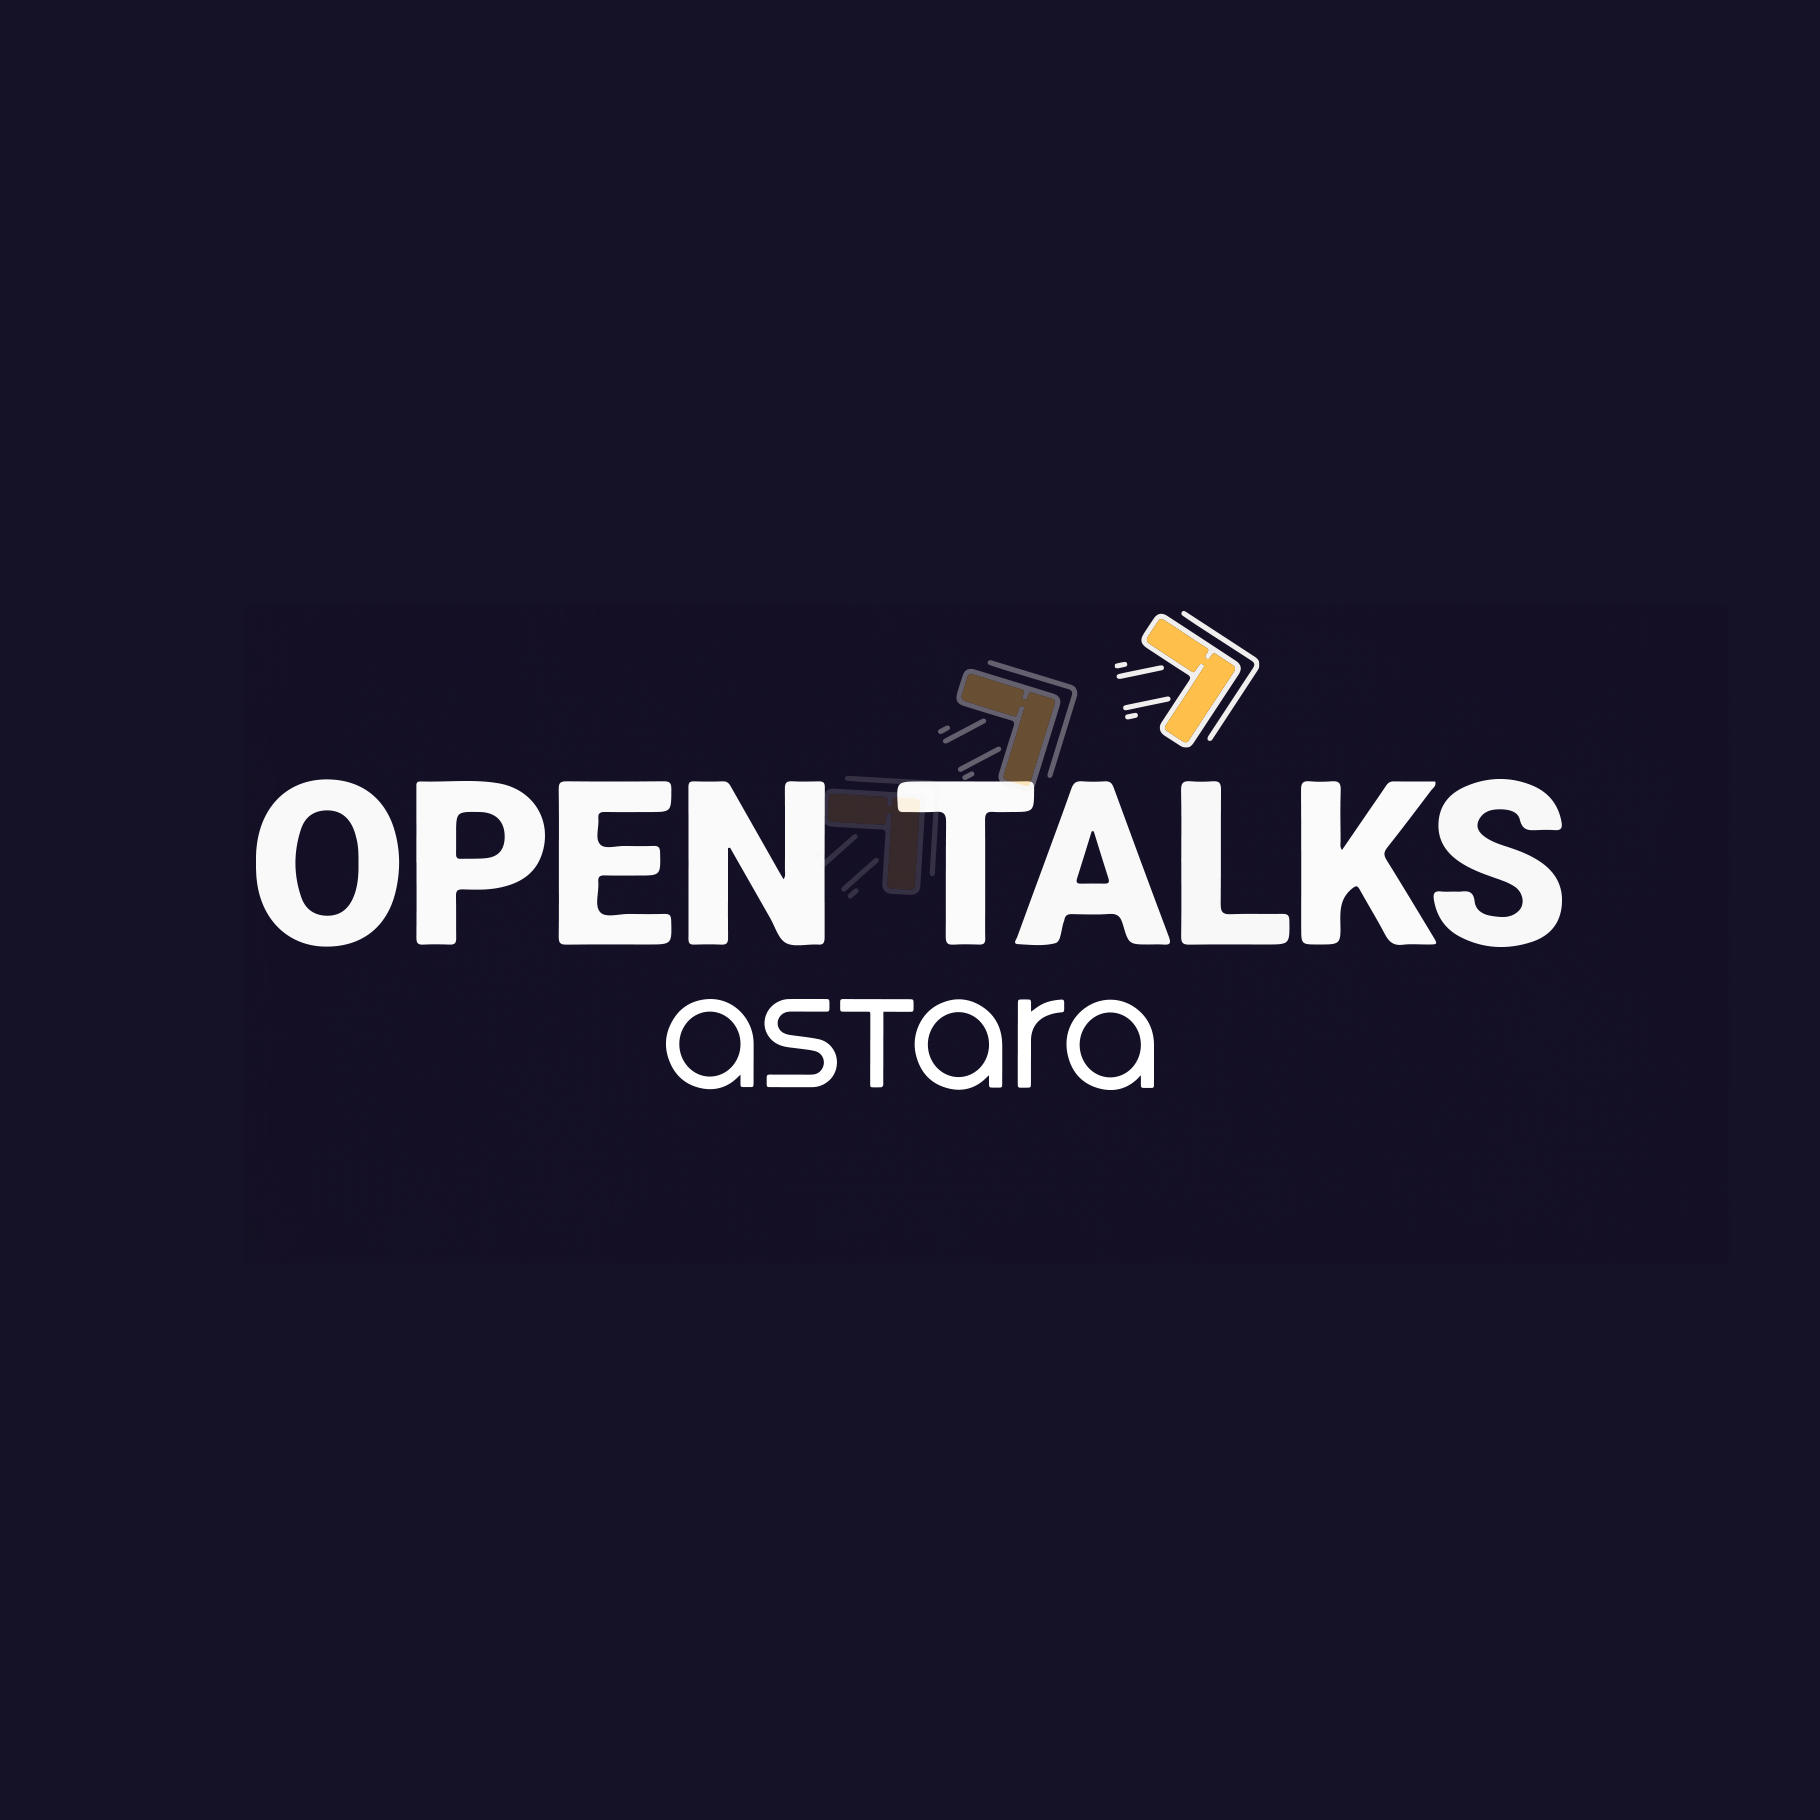 Open Talks, estreno el 1 de febrero